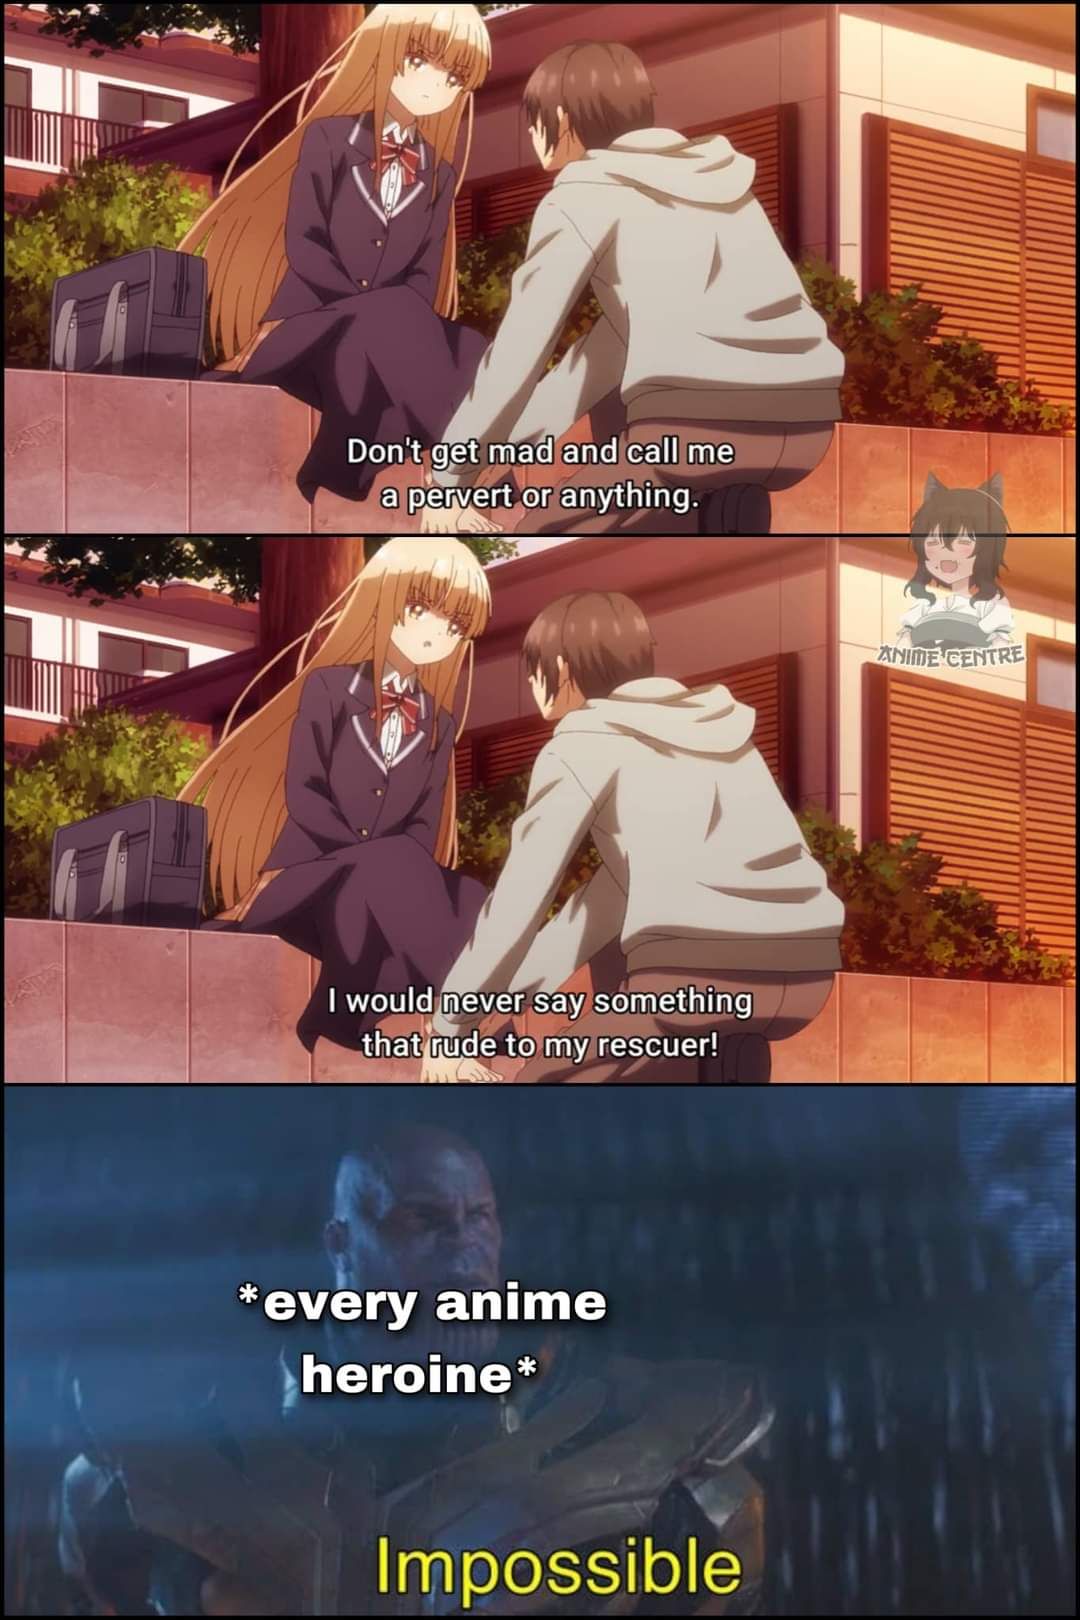 Mahiru broke the anime rule